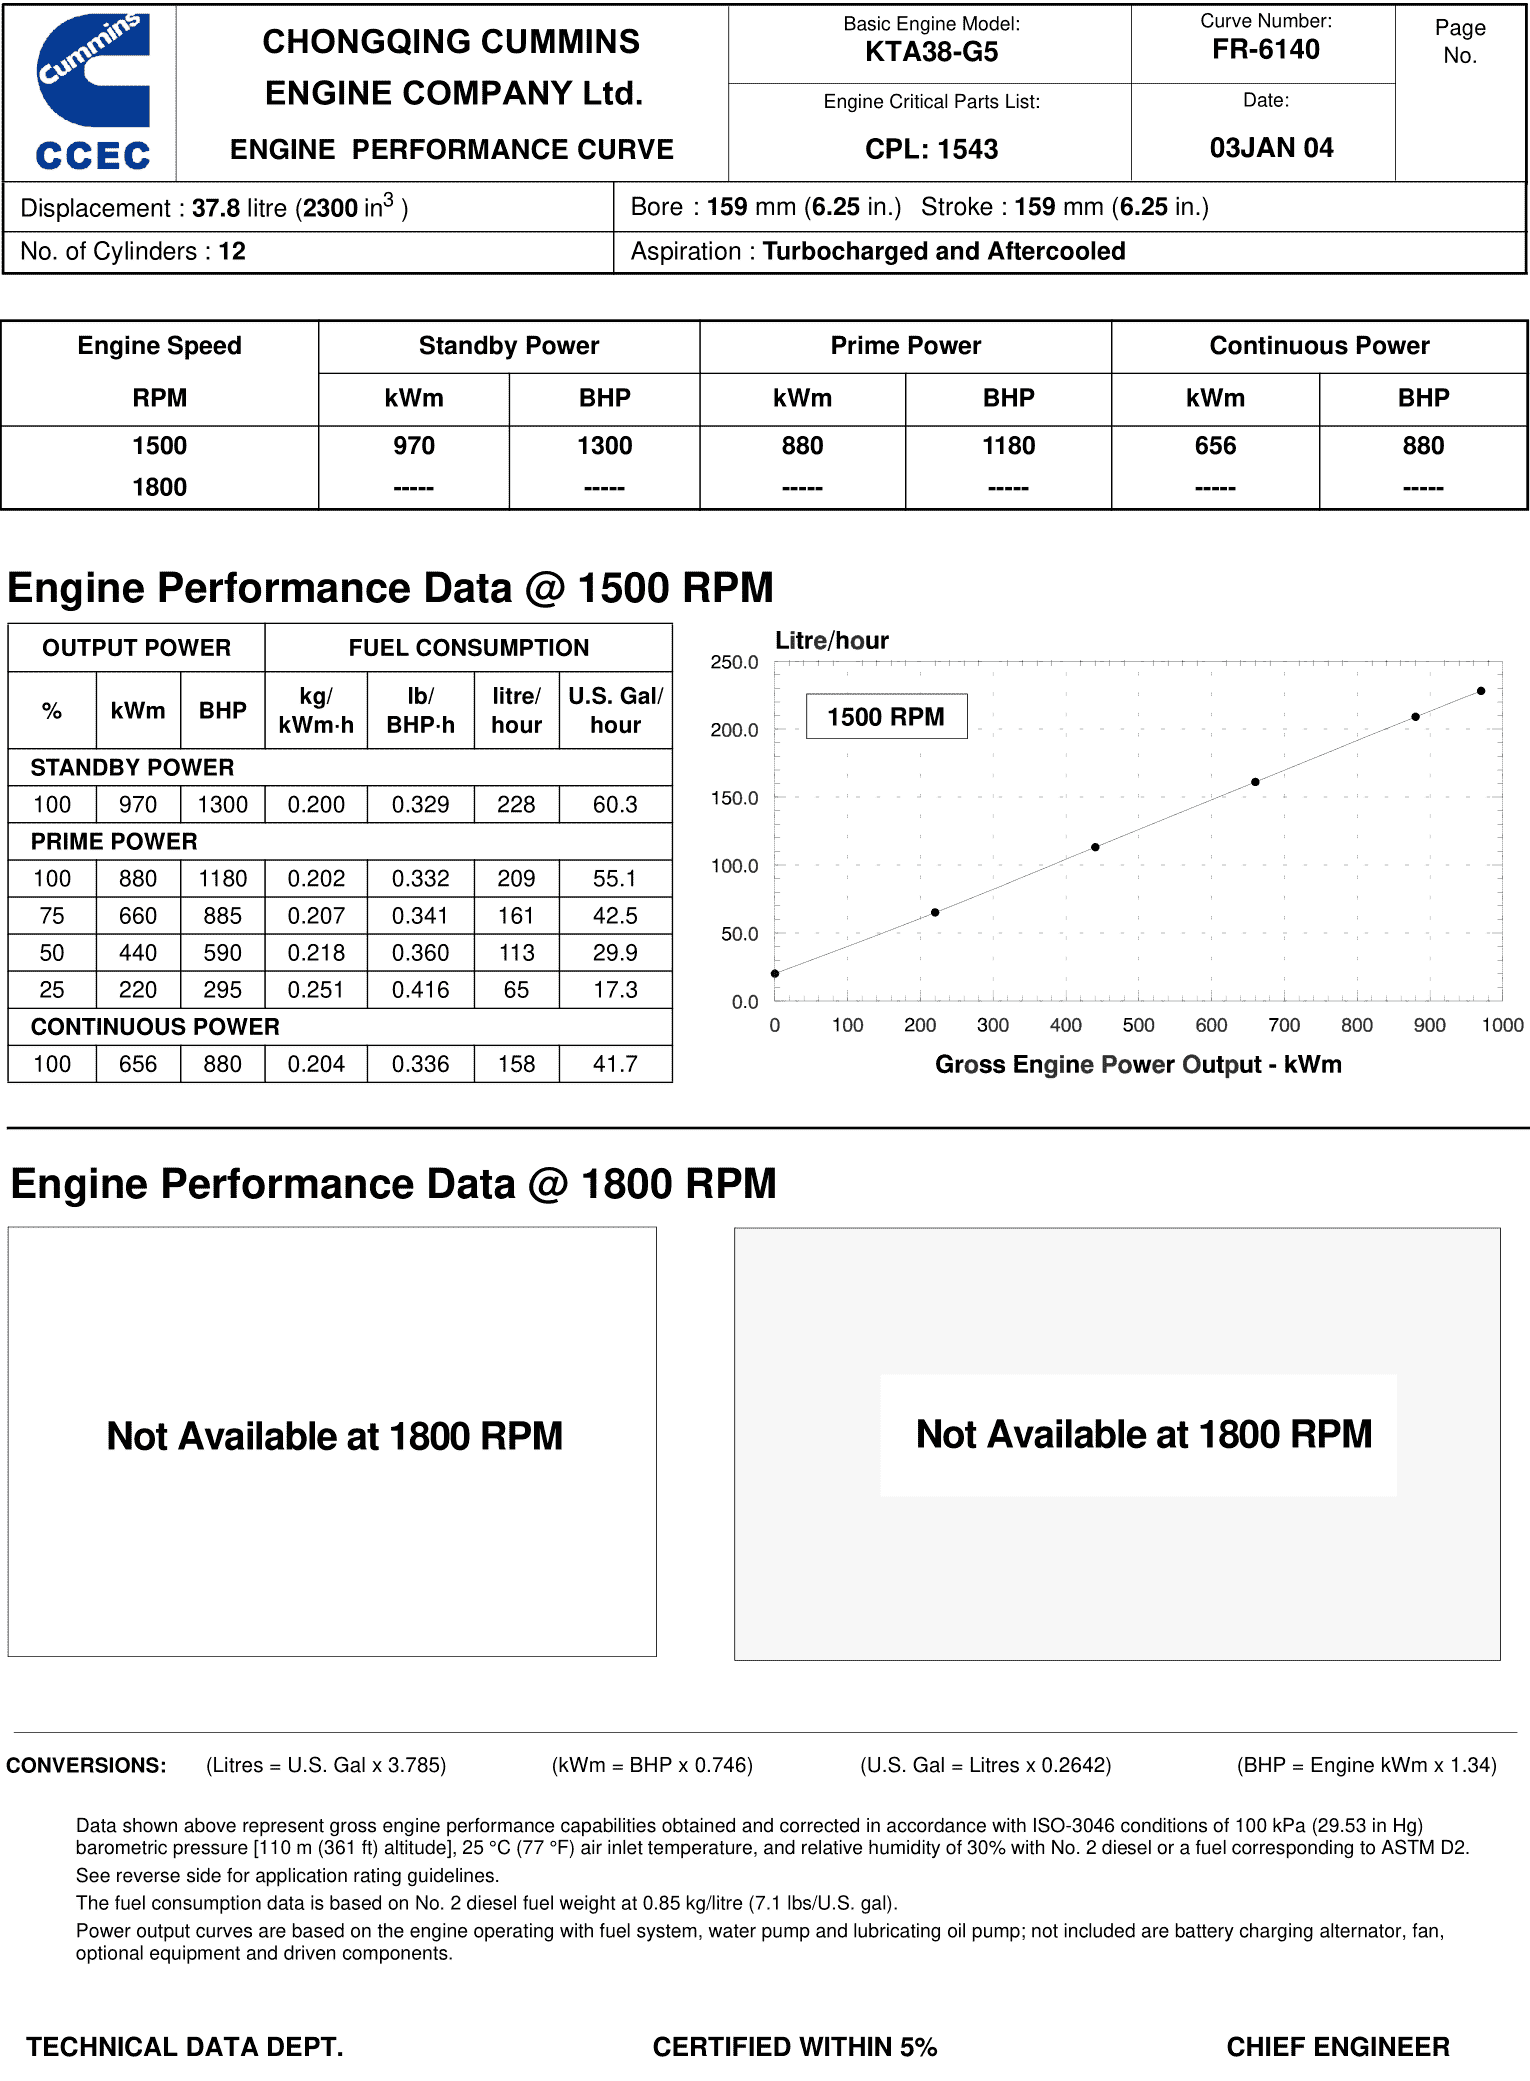 Cummins KTA38-G5 880kW datasheet